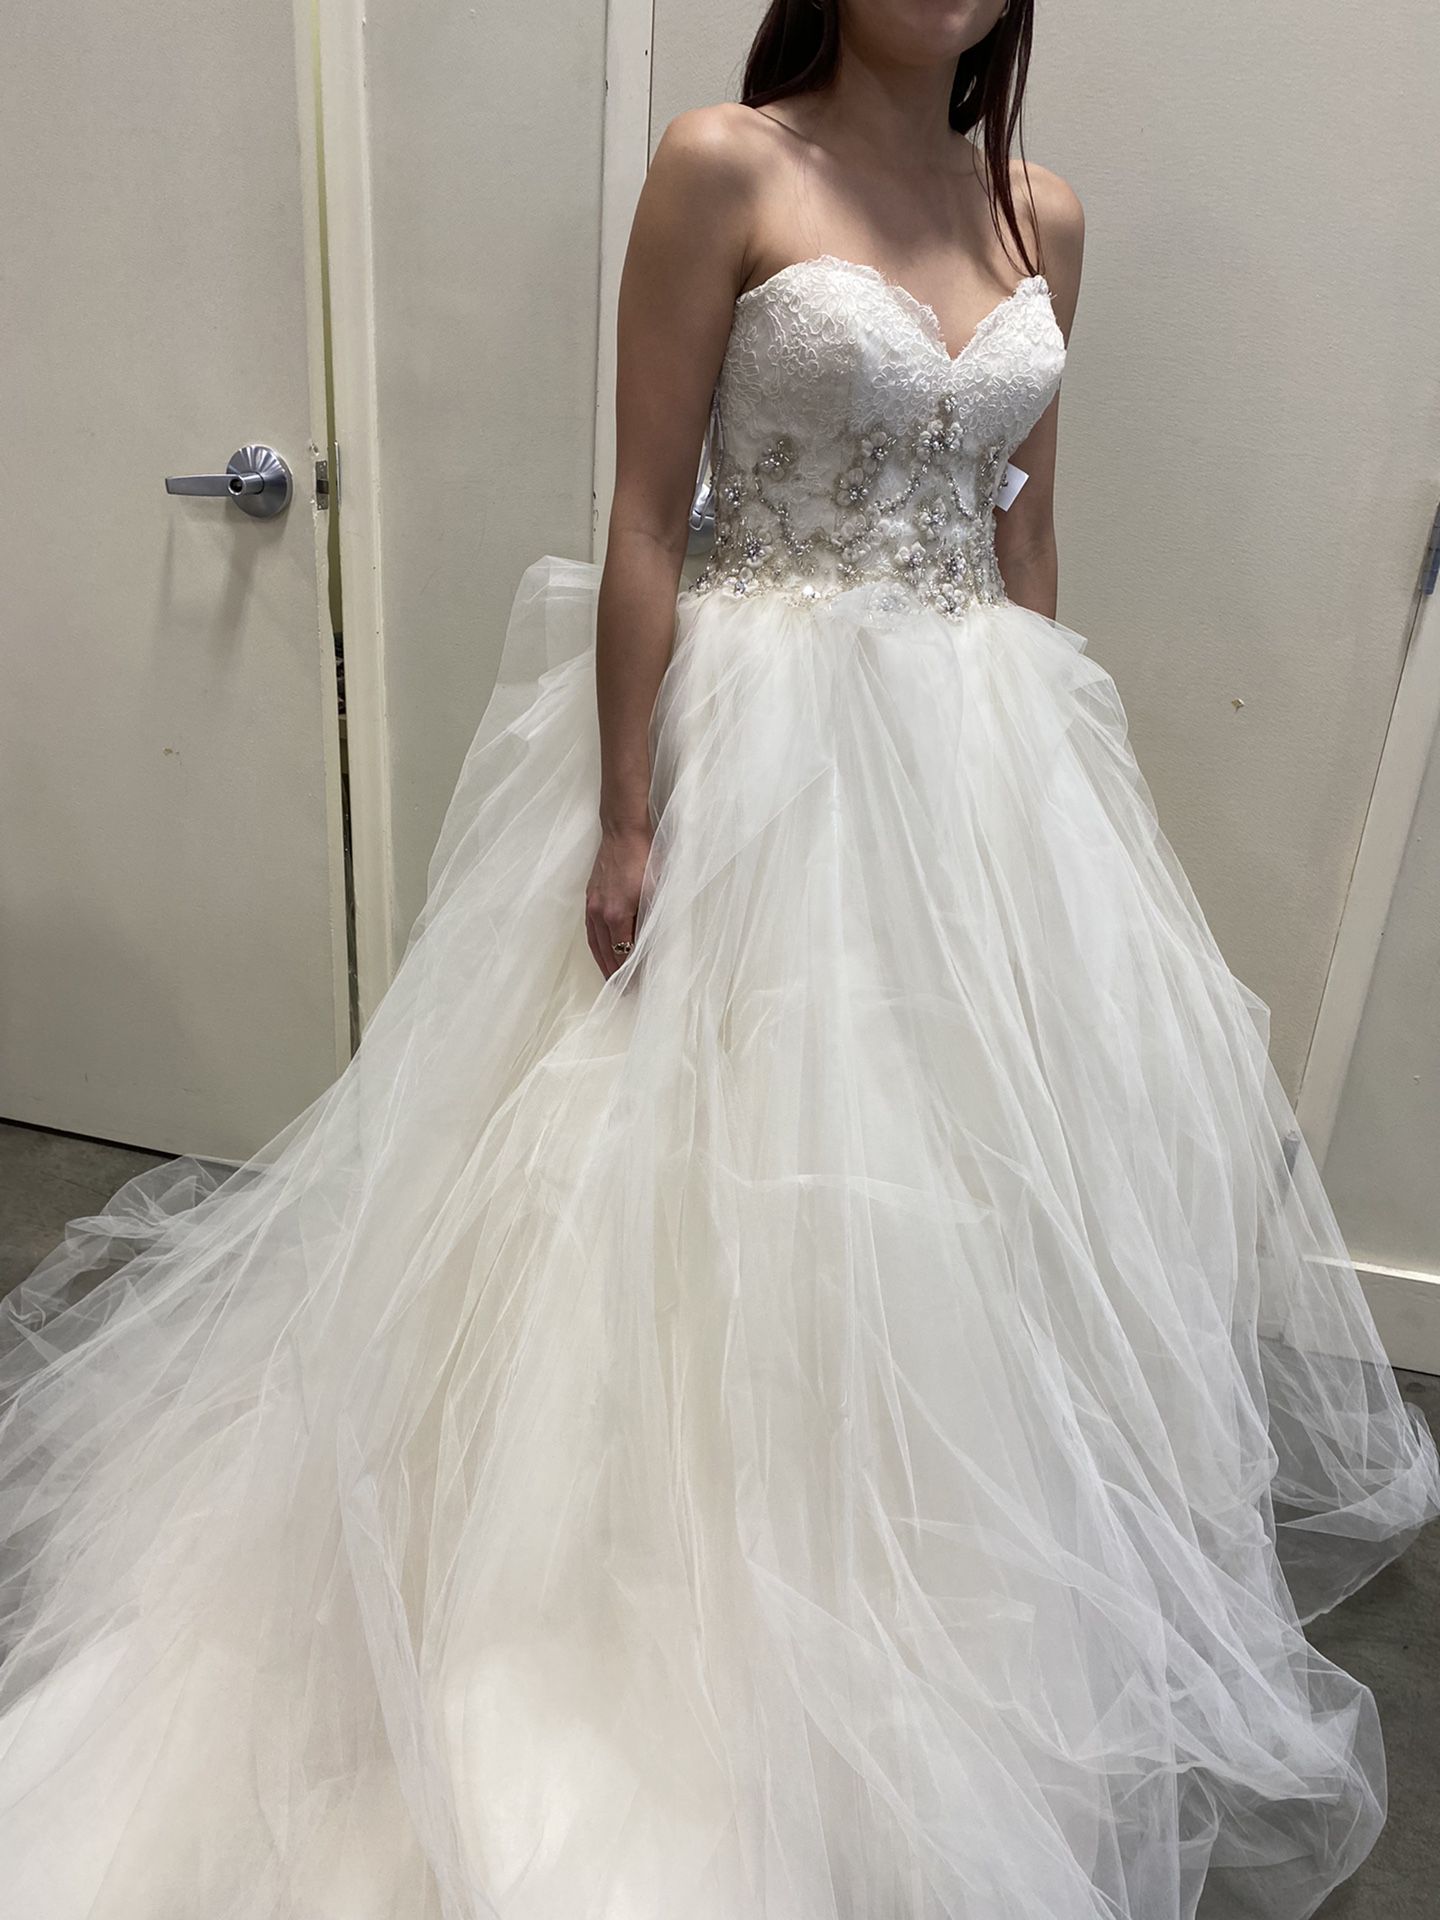 NEW WEDDING DRESS- Maggie Sottero Size 4-6